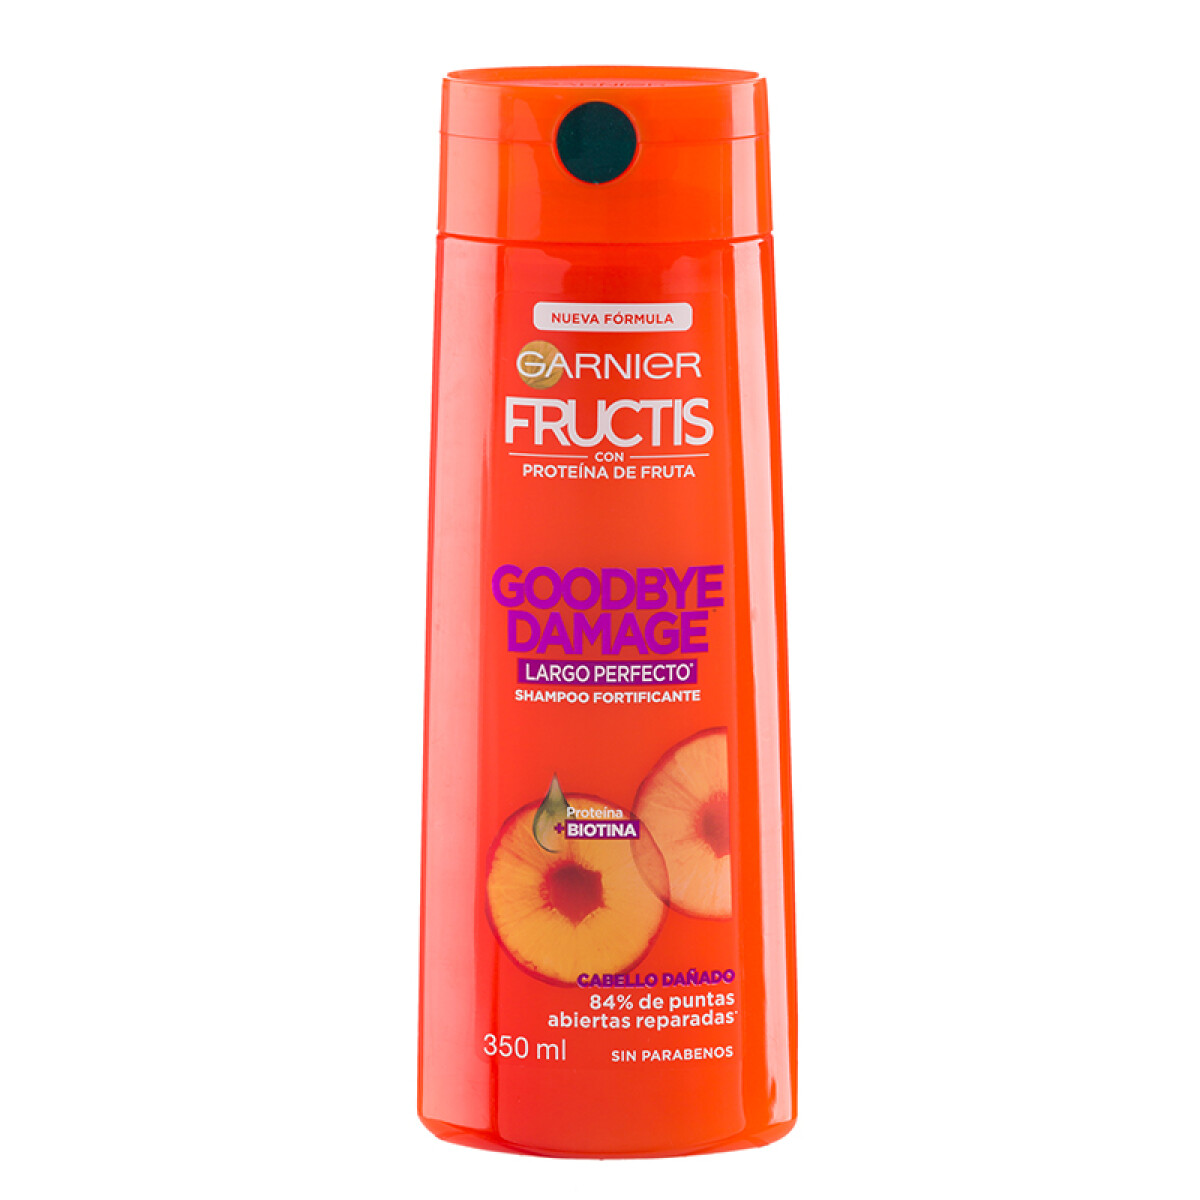 Shampoo Garnier Fructis 350 ml - Goodbye daños 